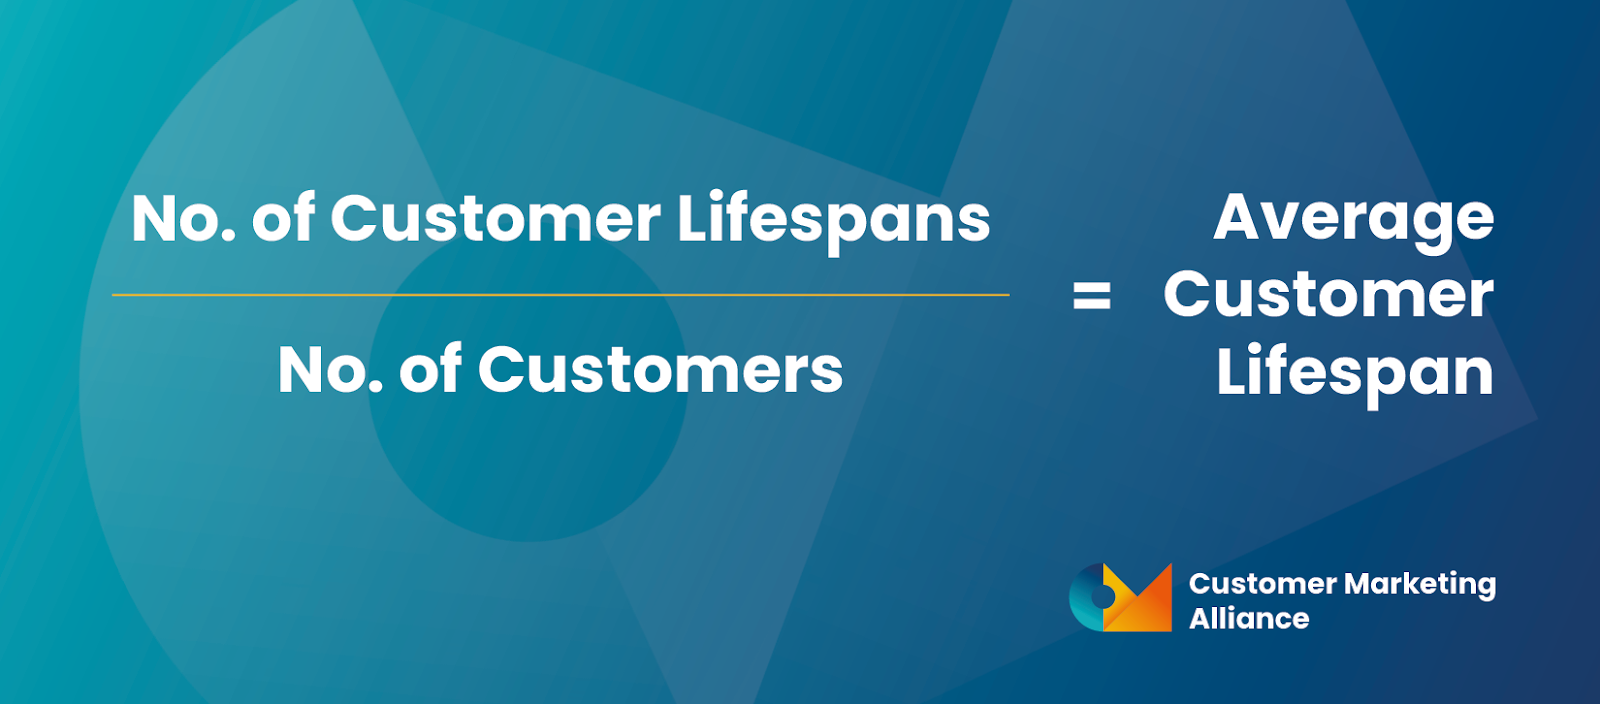 { sum of customer lifespans/no. of customers = average customer lifespan }